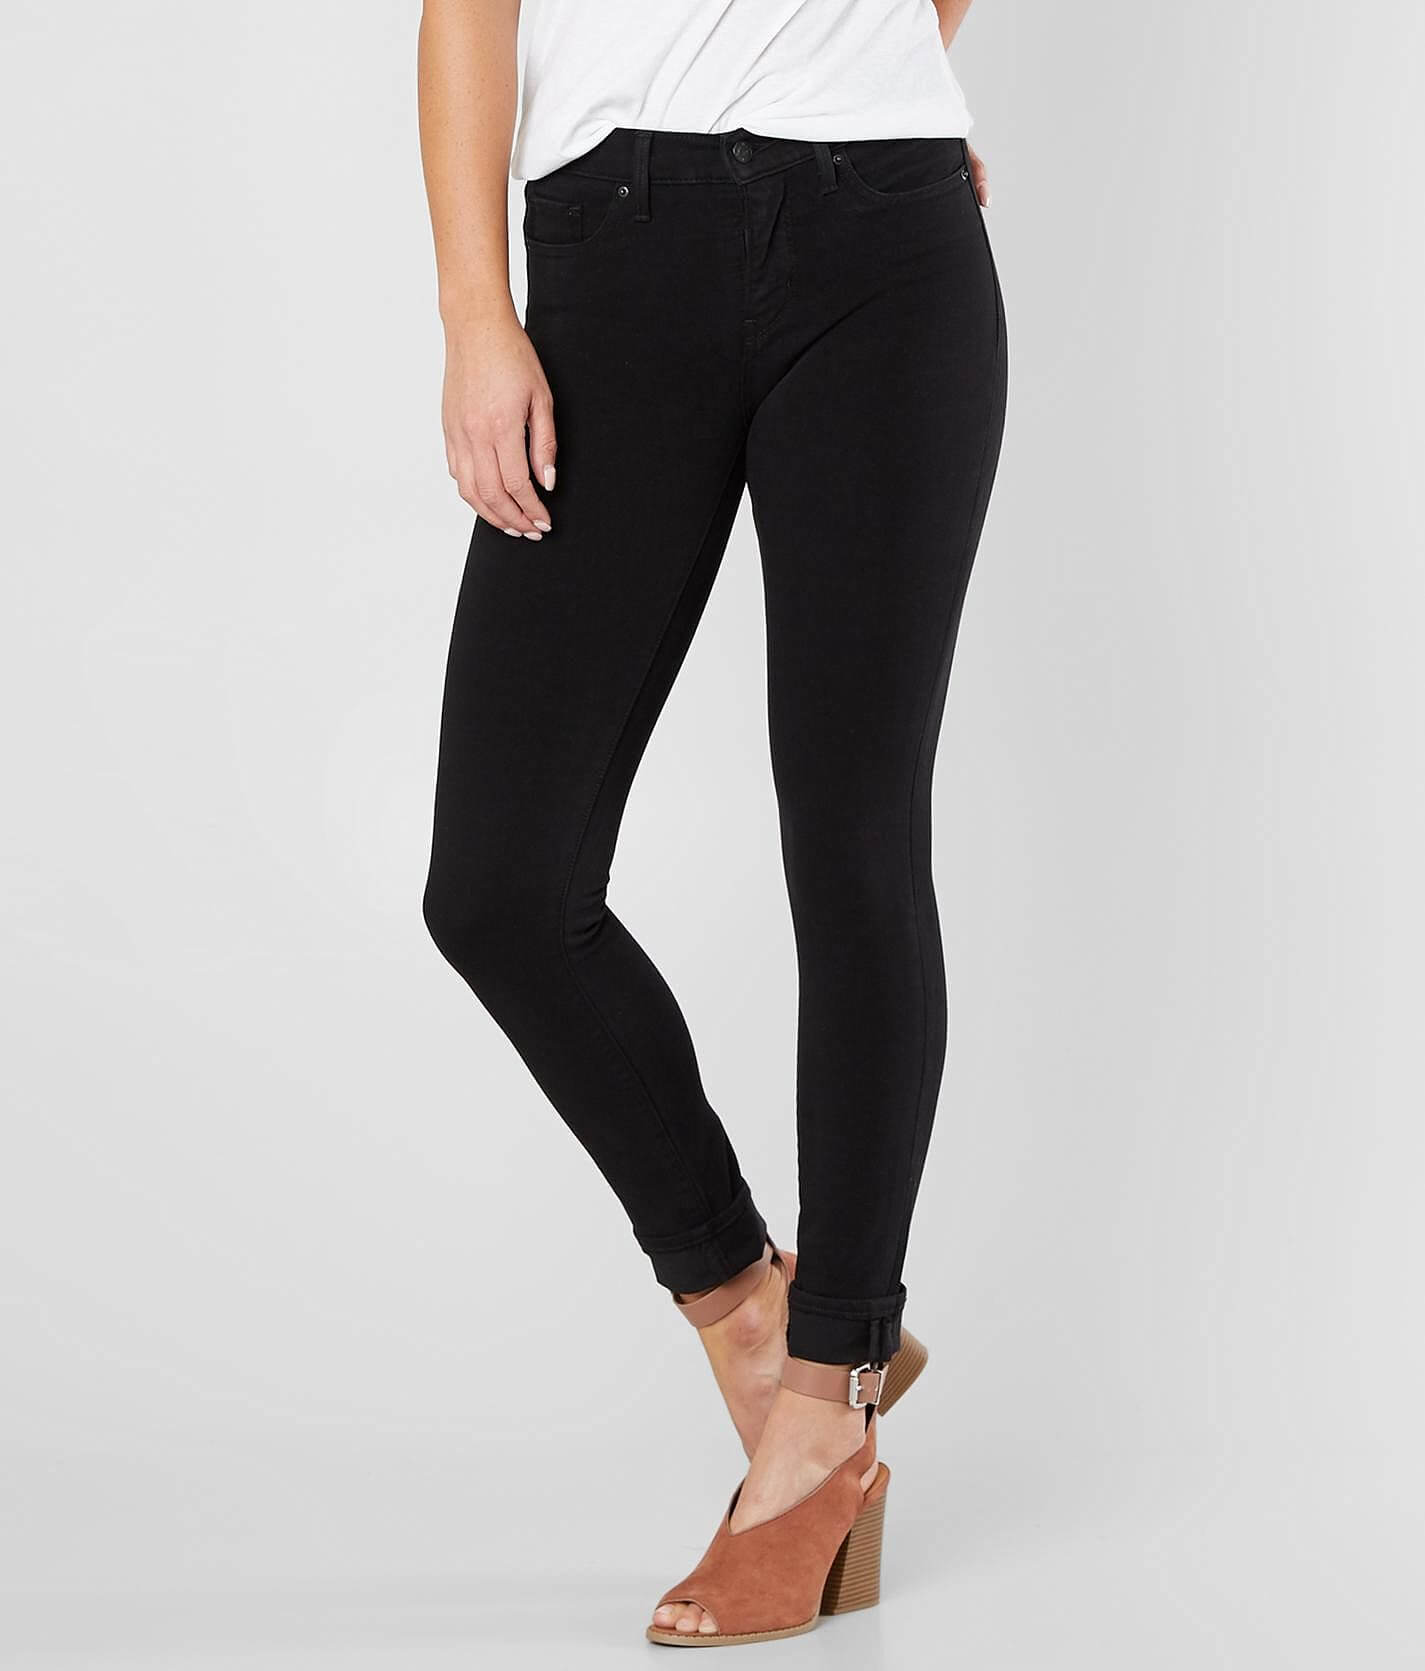 Levi's® Premium 311 Shaping Skinny Jean - Women's Jeans in Ultra Black |  Buckle